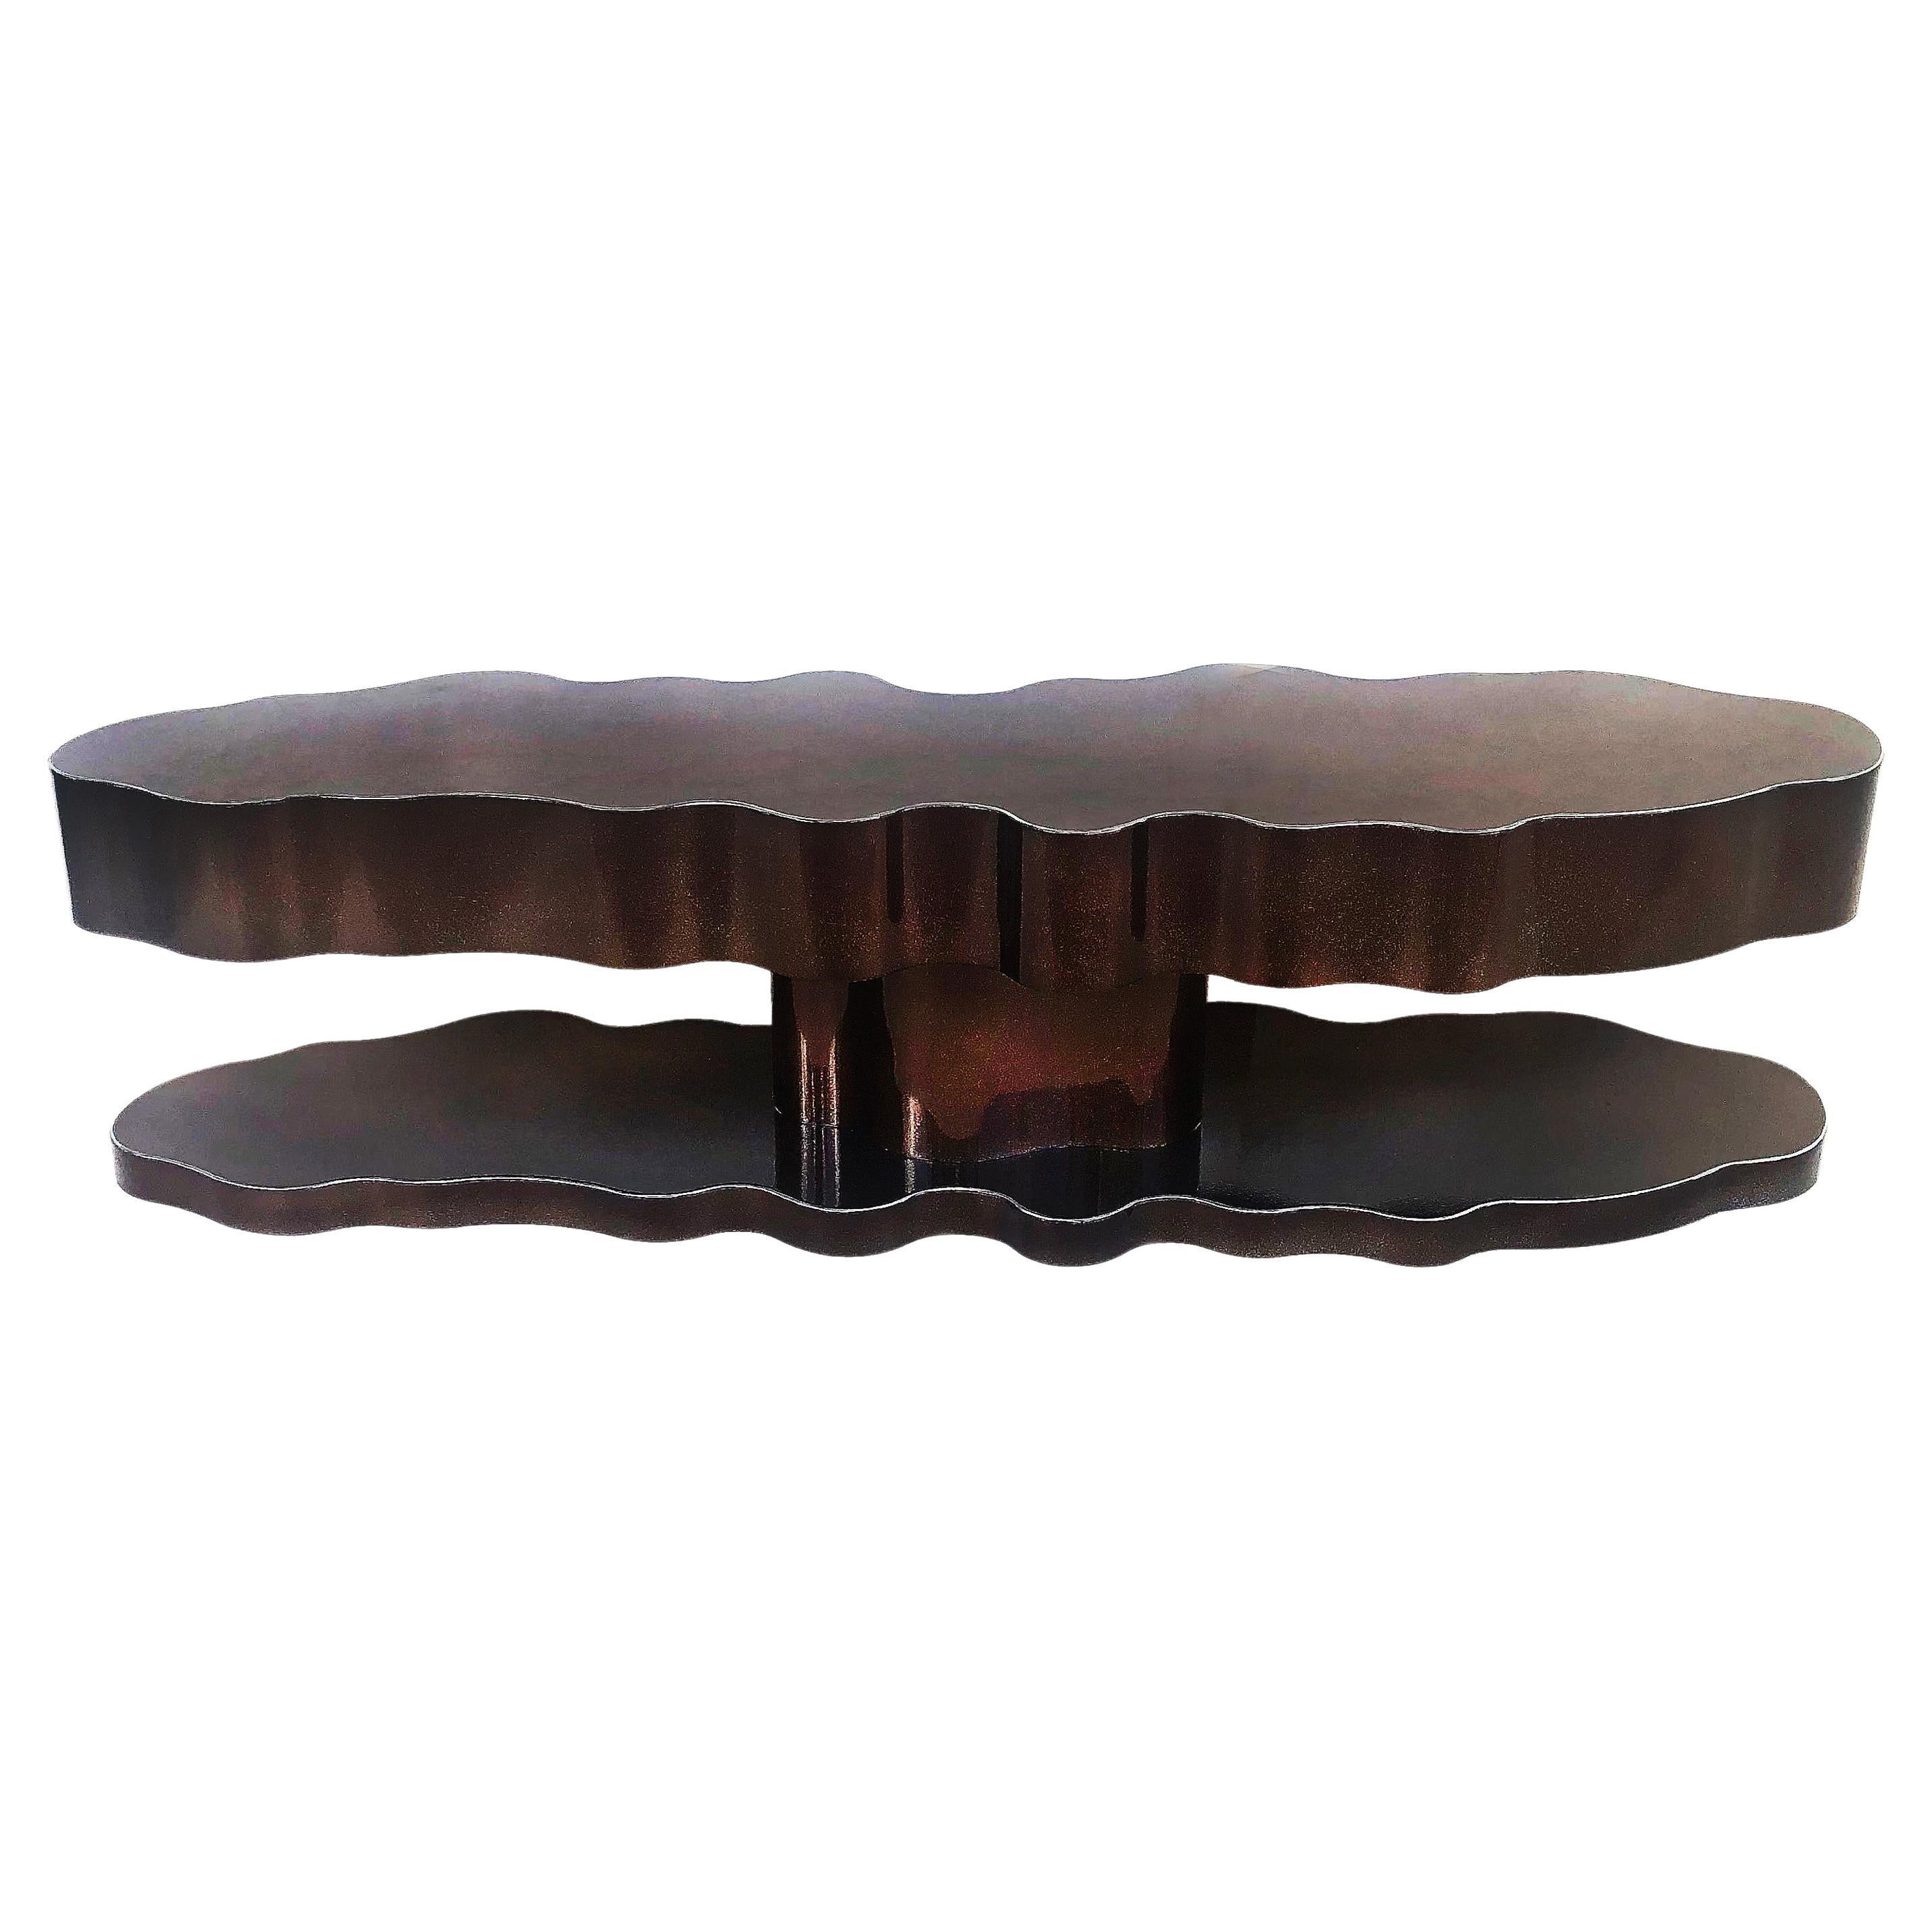 Bert Furnari Abstract Sculptural Coffee Table, Aluminum Powder-Coated Finish For Sale